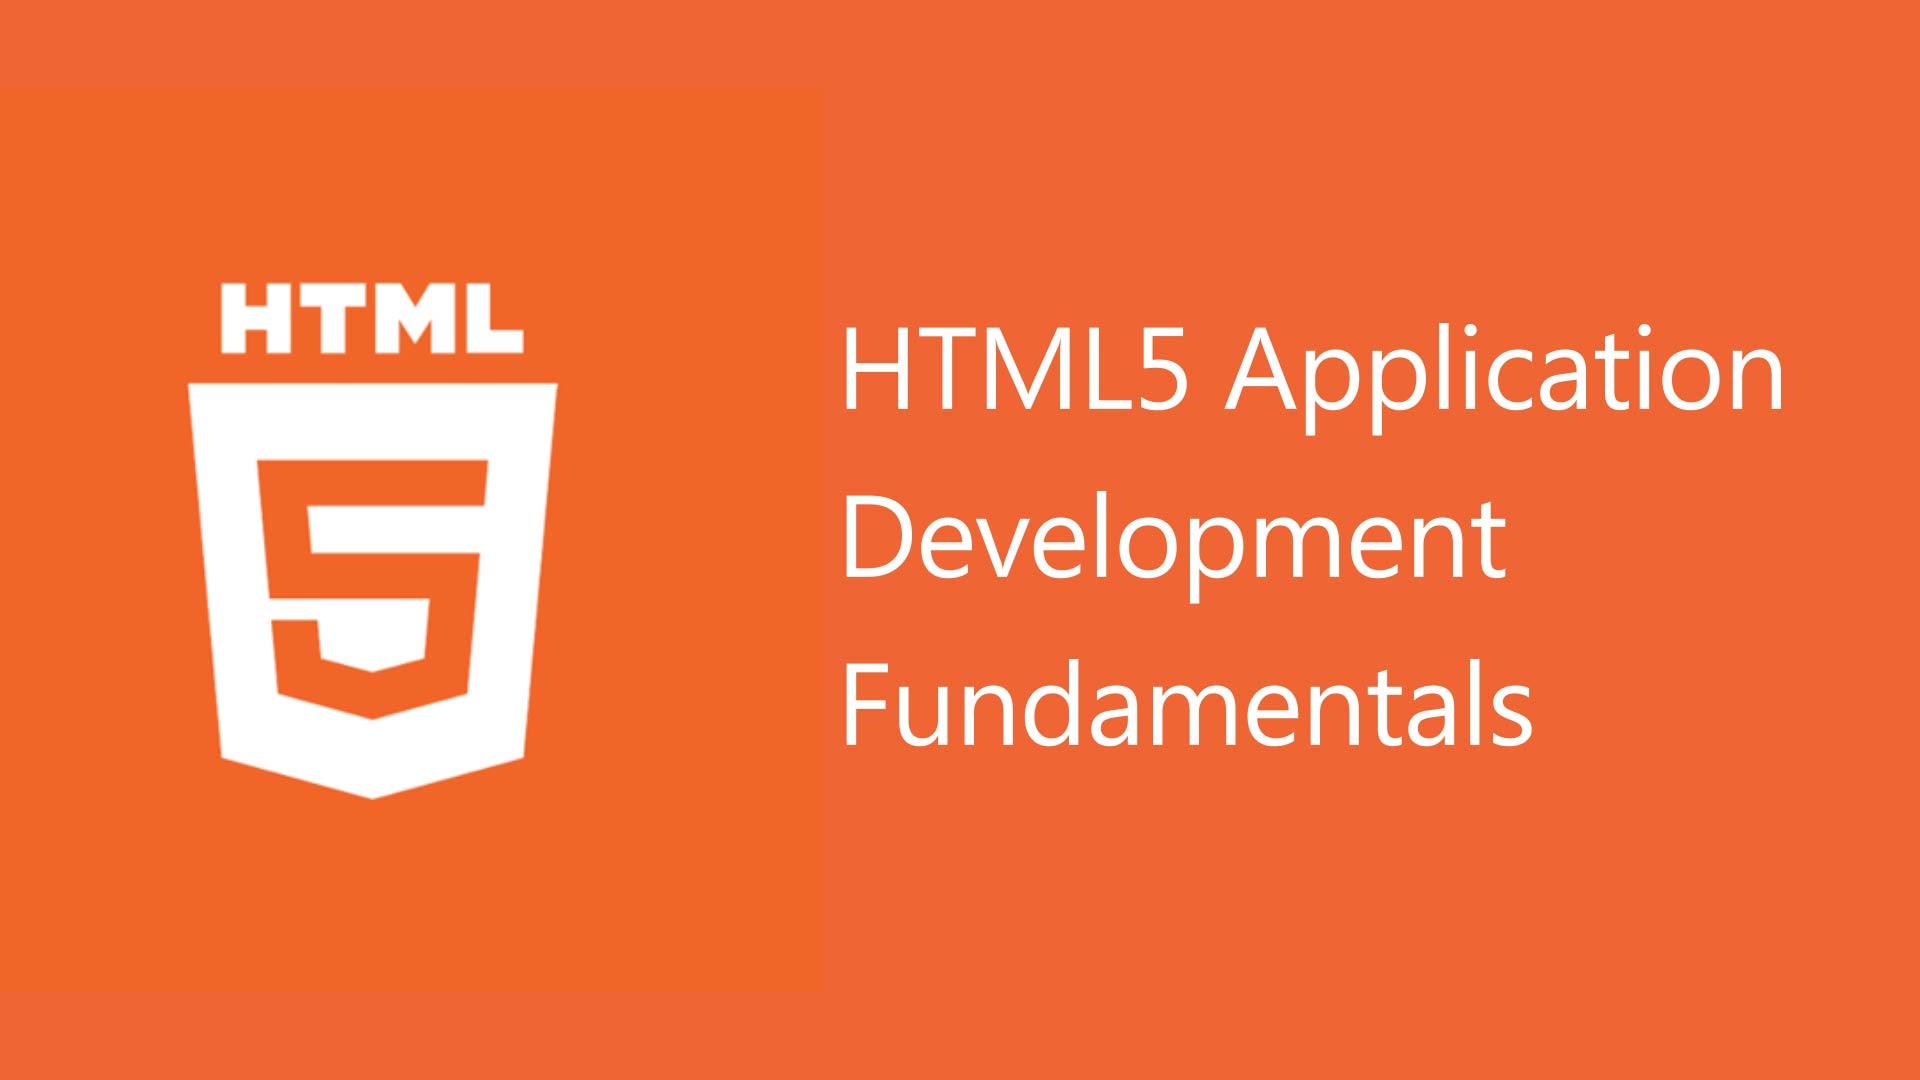 HTML5 Application Development Fundamentals